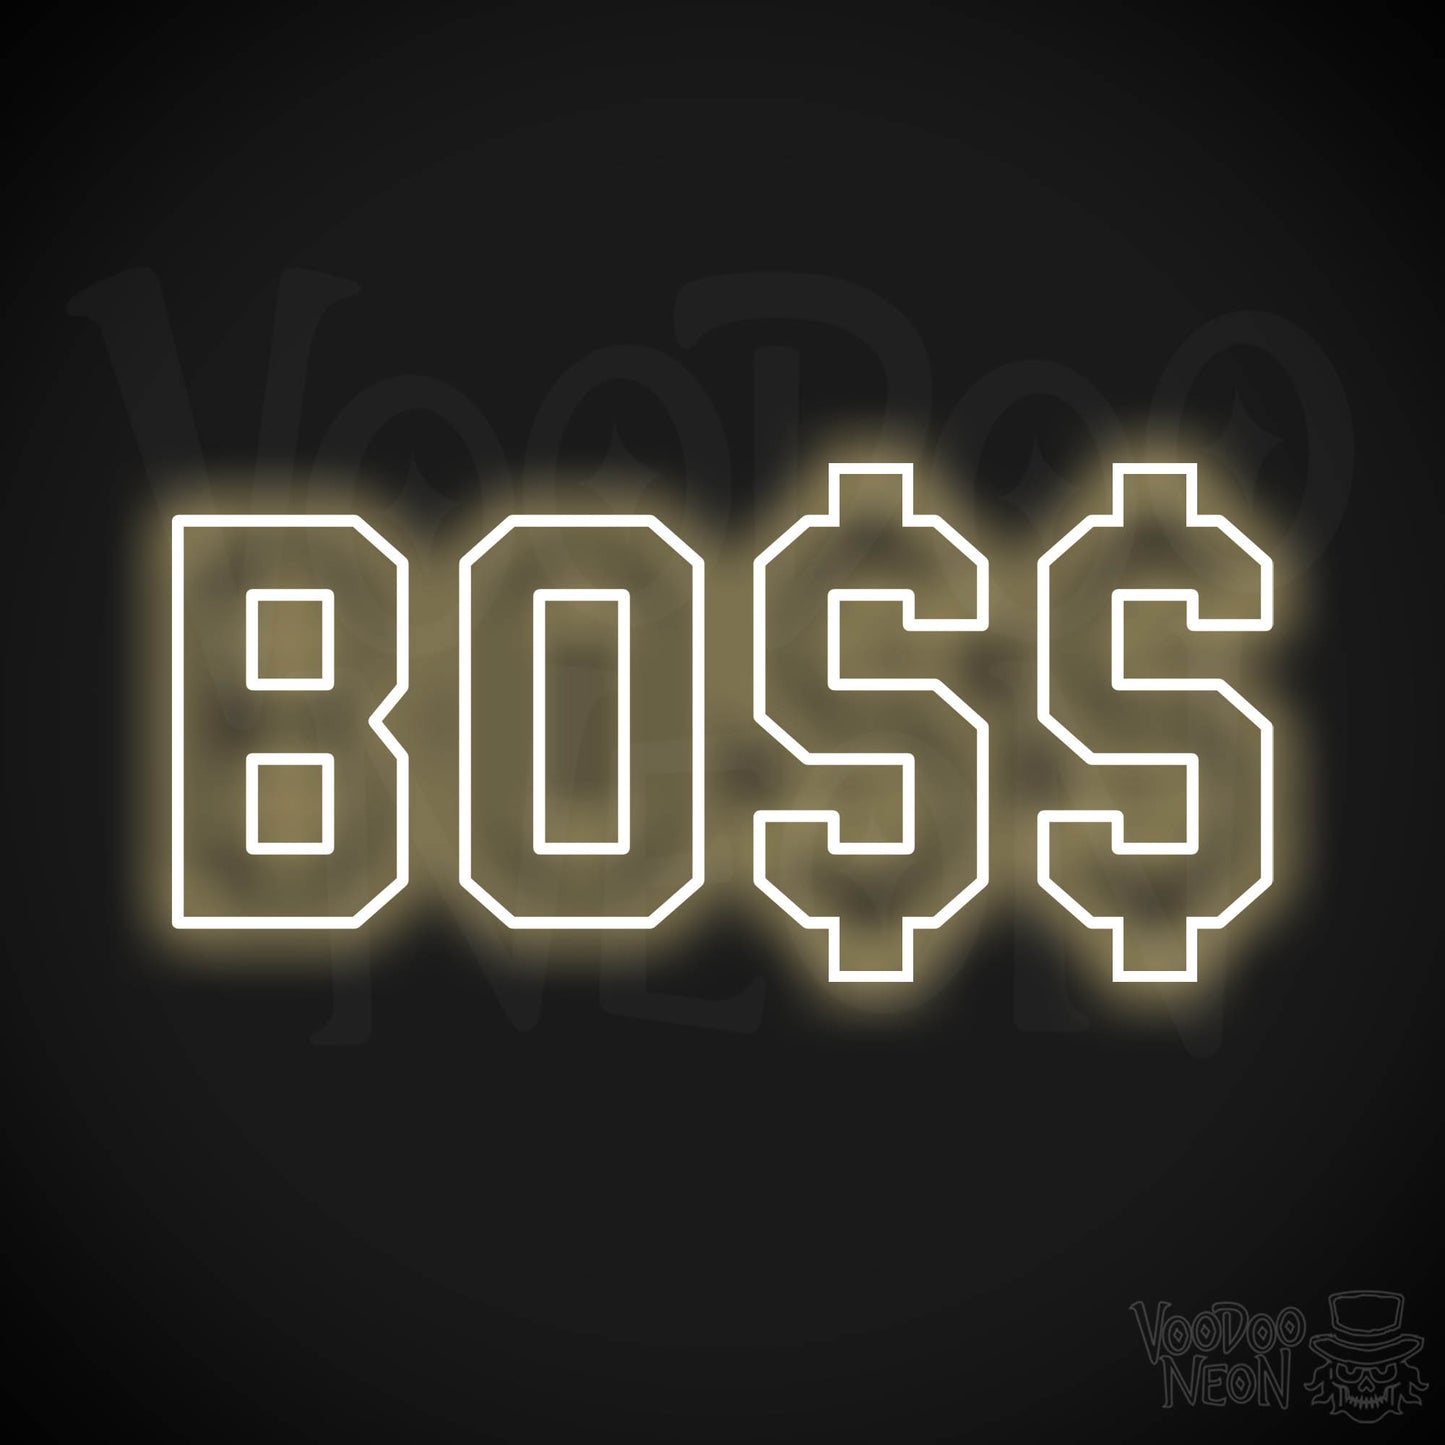 Boss LED Neon - Warm White